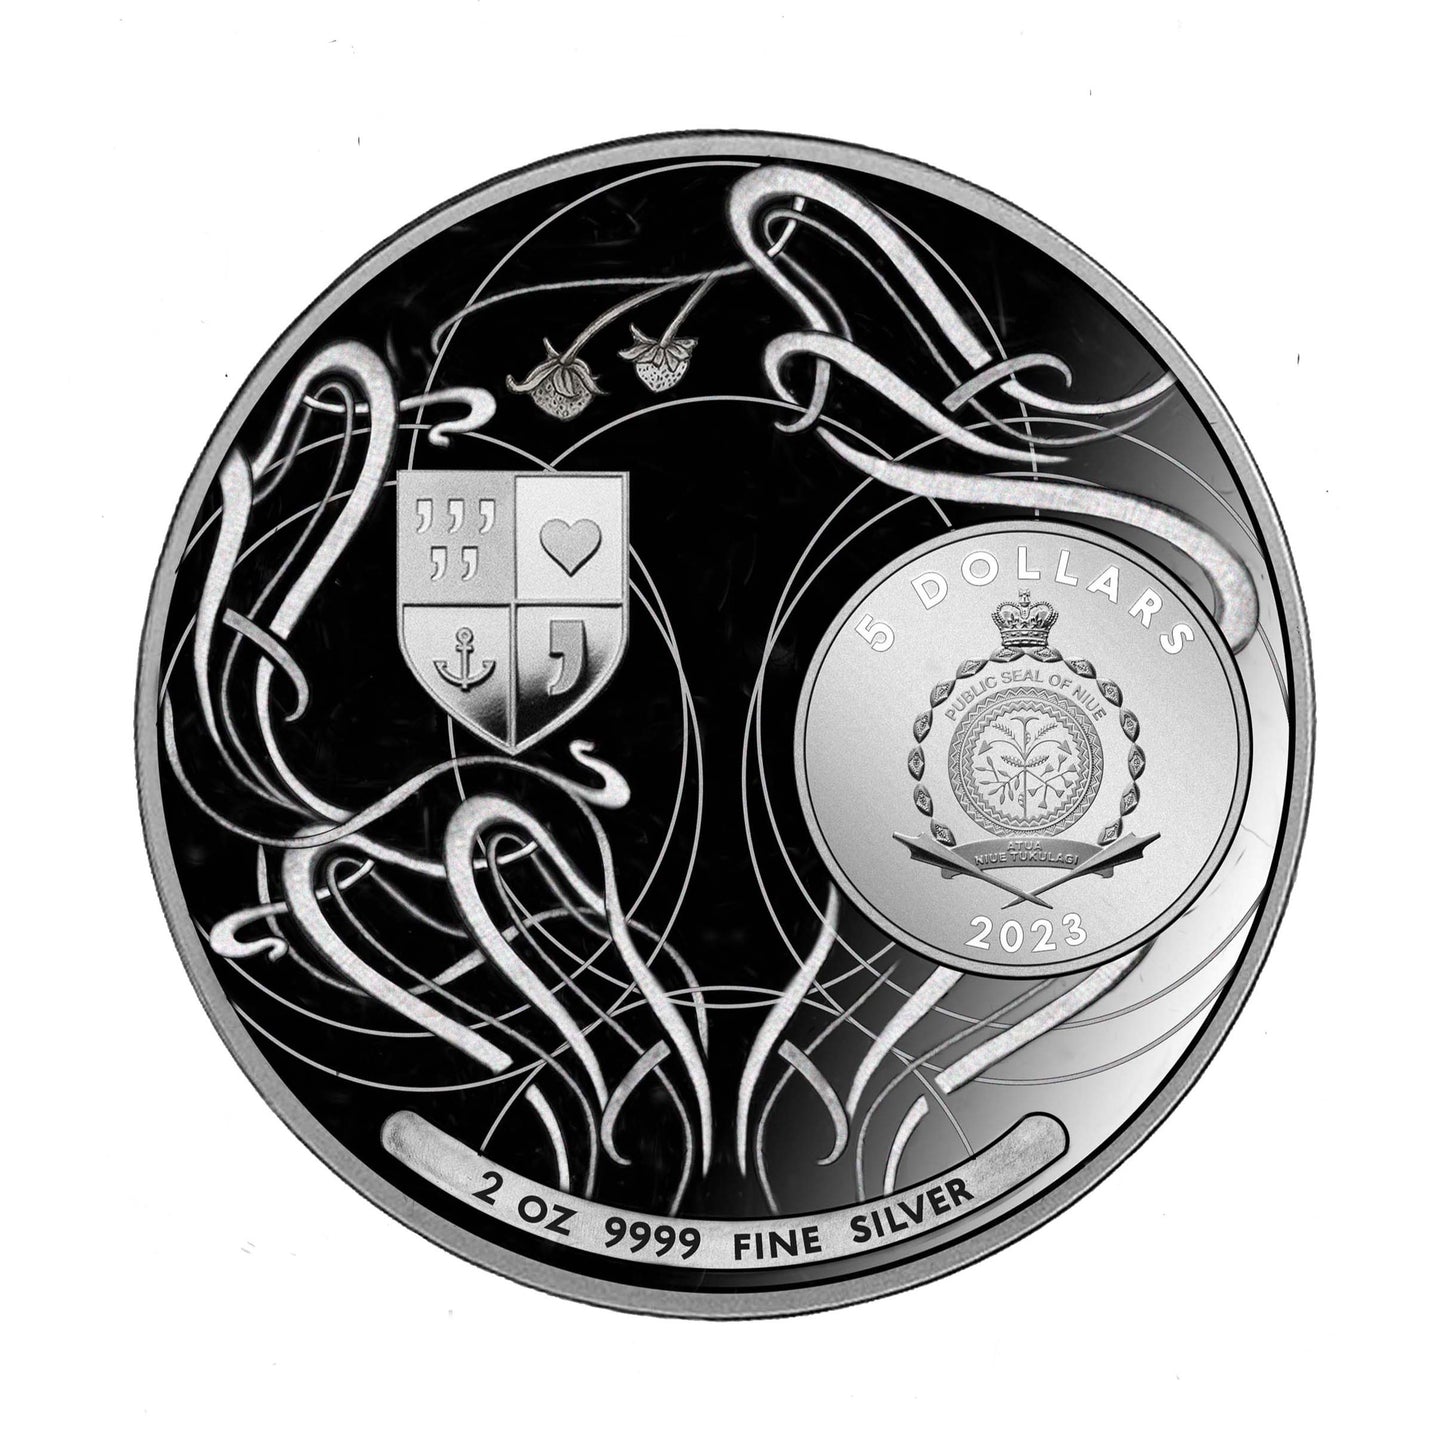 Niue Coat of arms & Le Grand Mint 2023